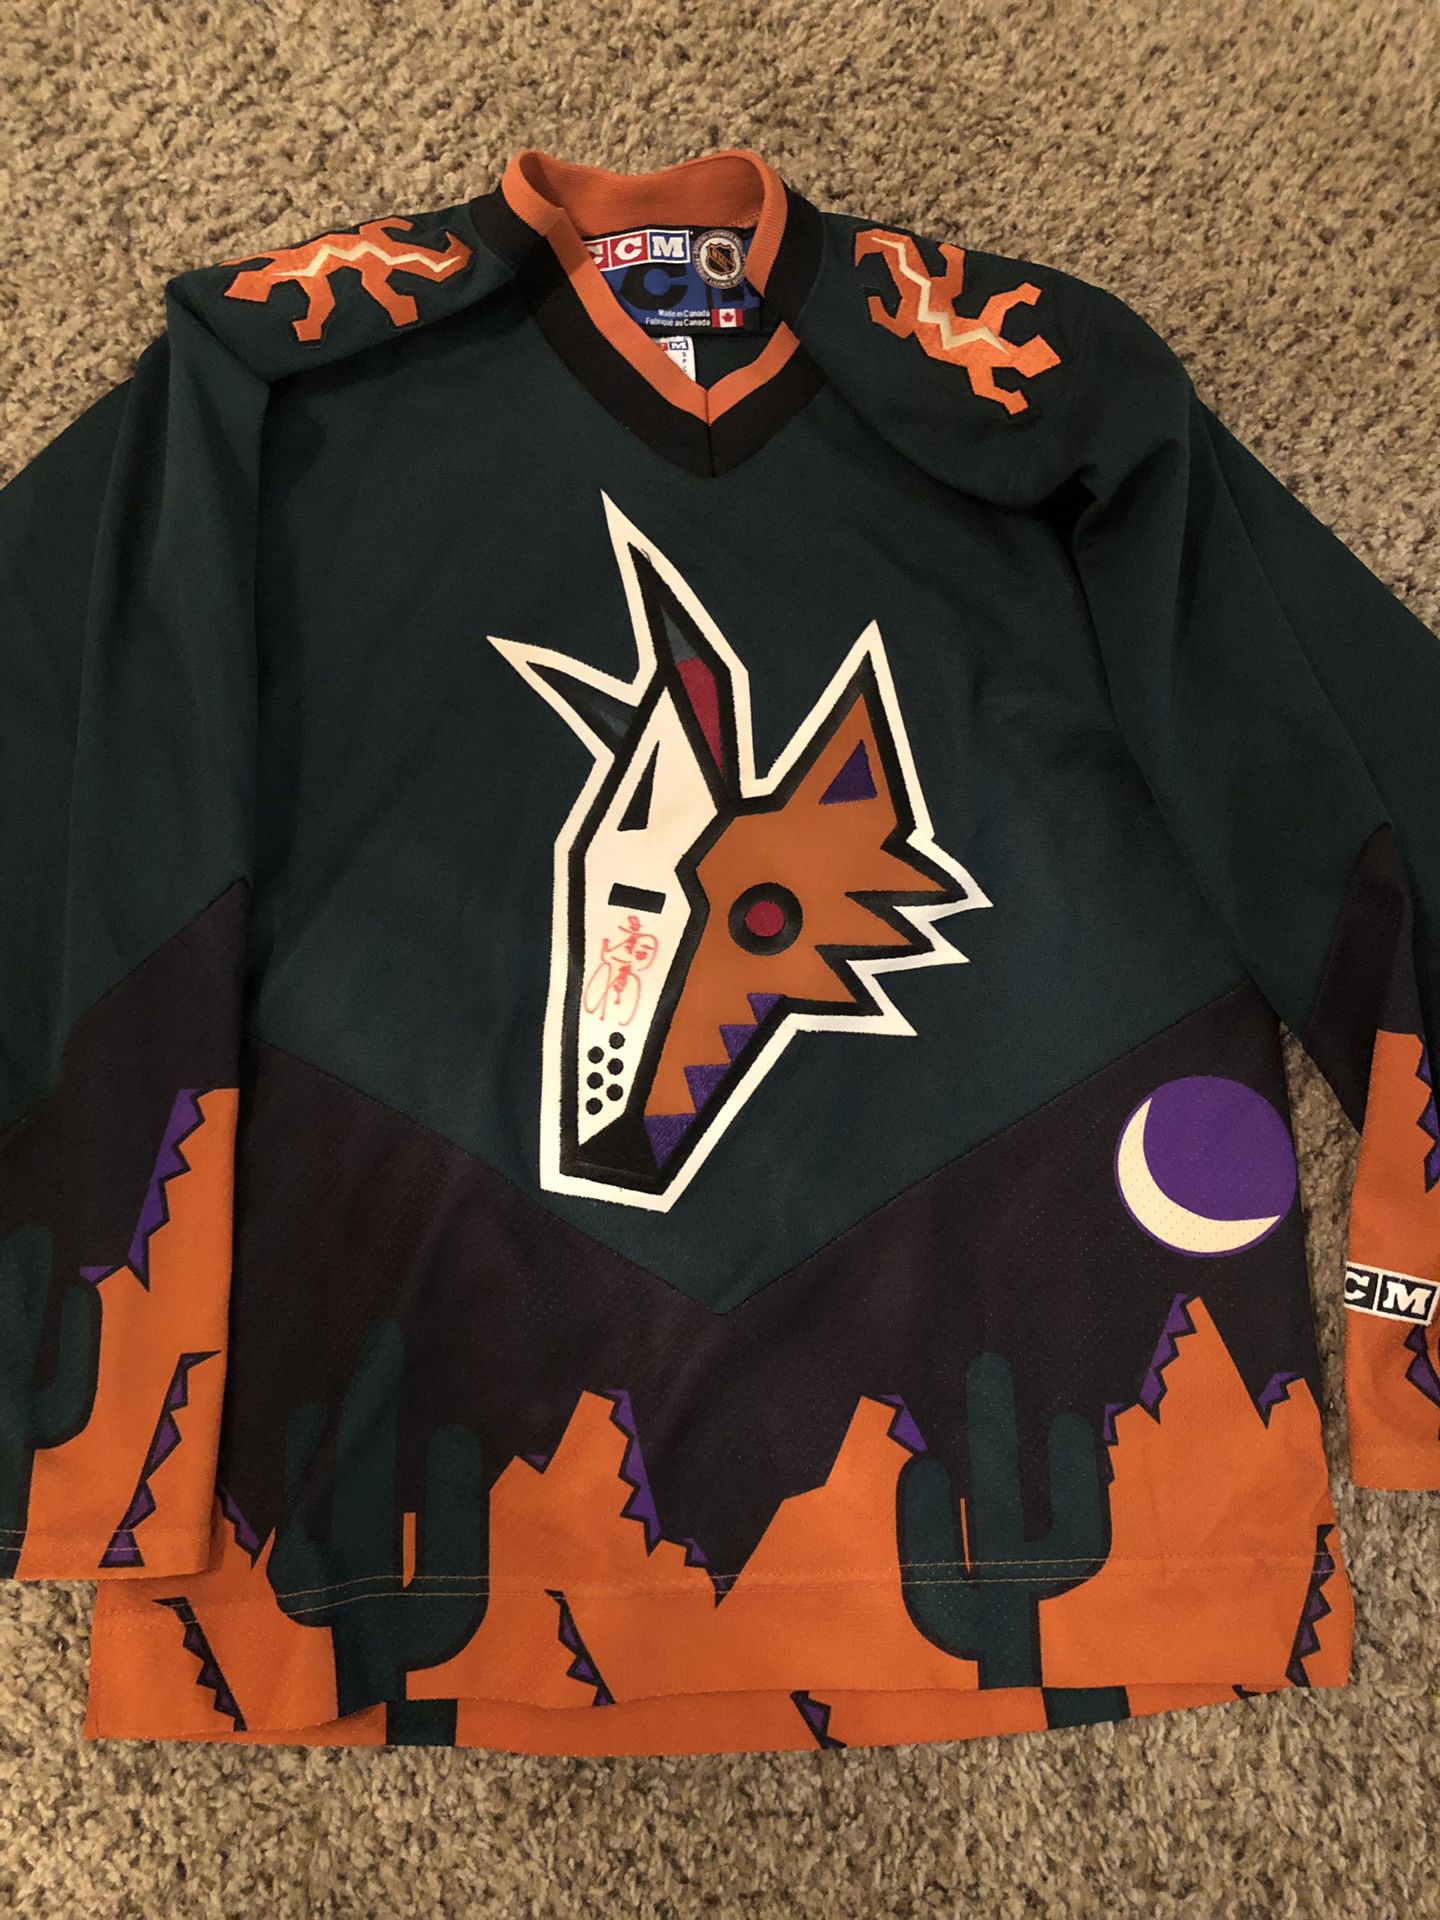 New RARE NHL Arizona Phoenix Coyotes Alternate Jersey Small